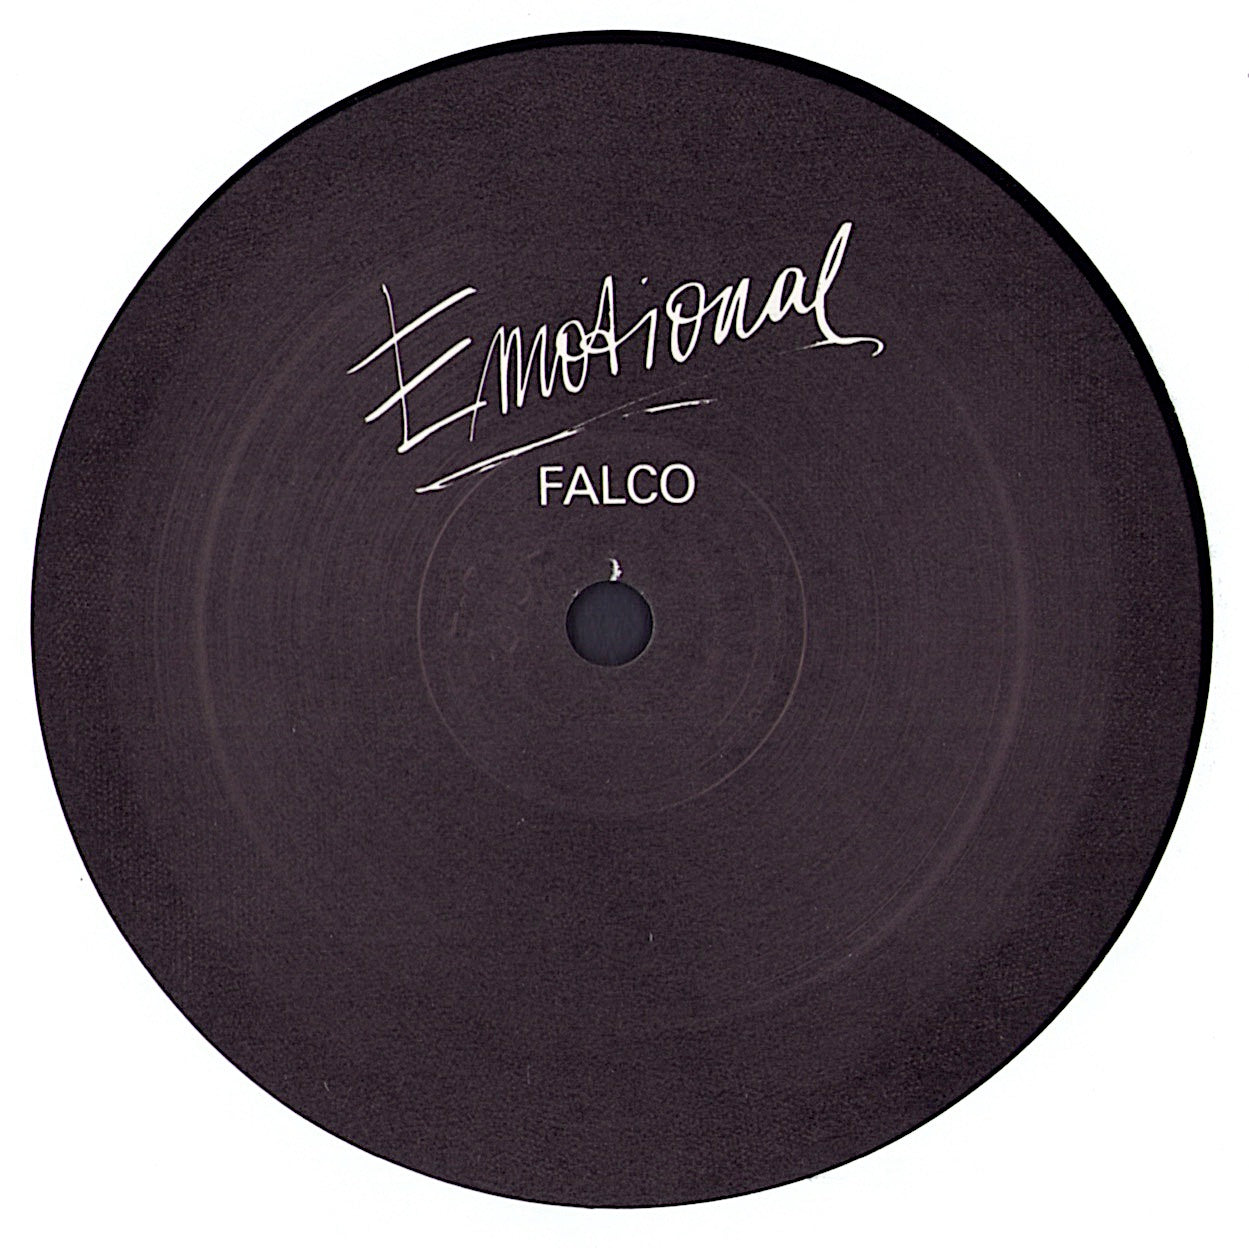 Falco ‎- Emotional Vinyl LP